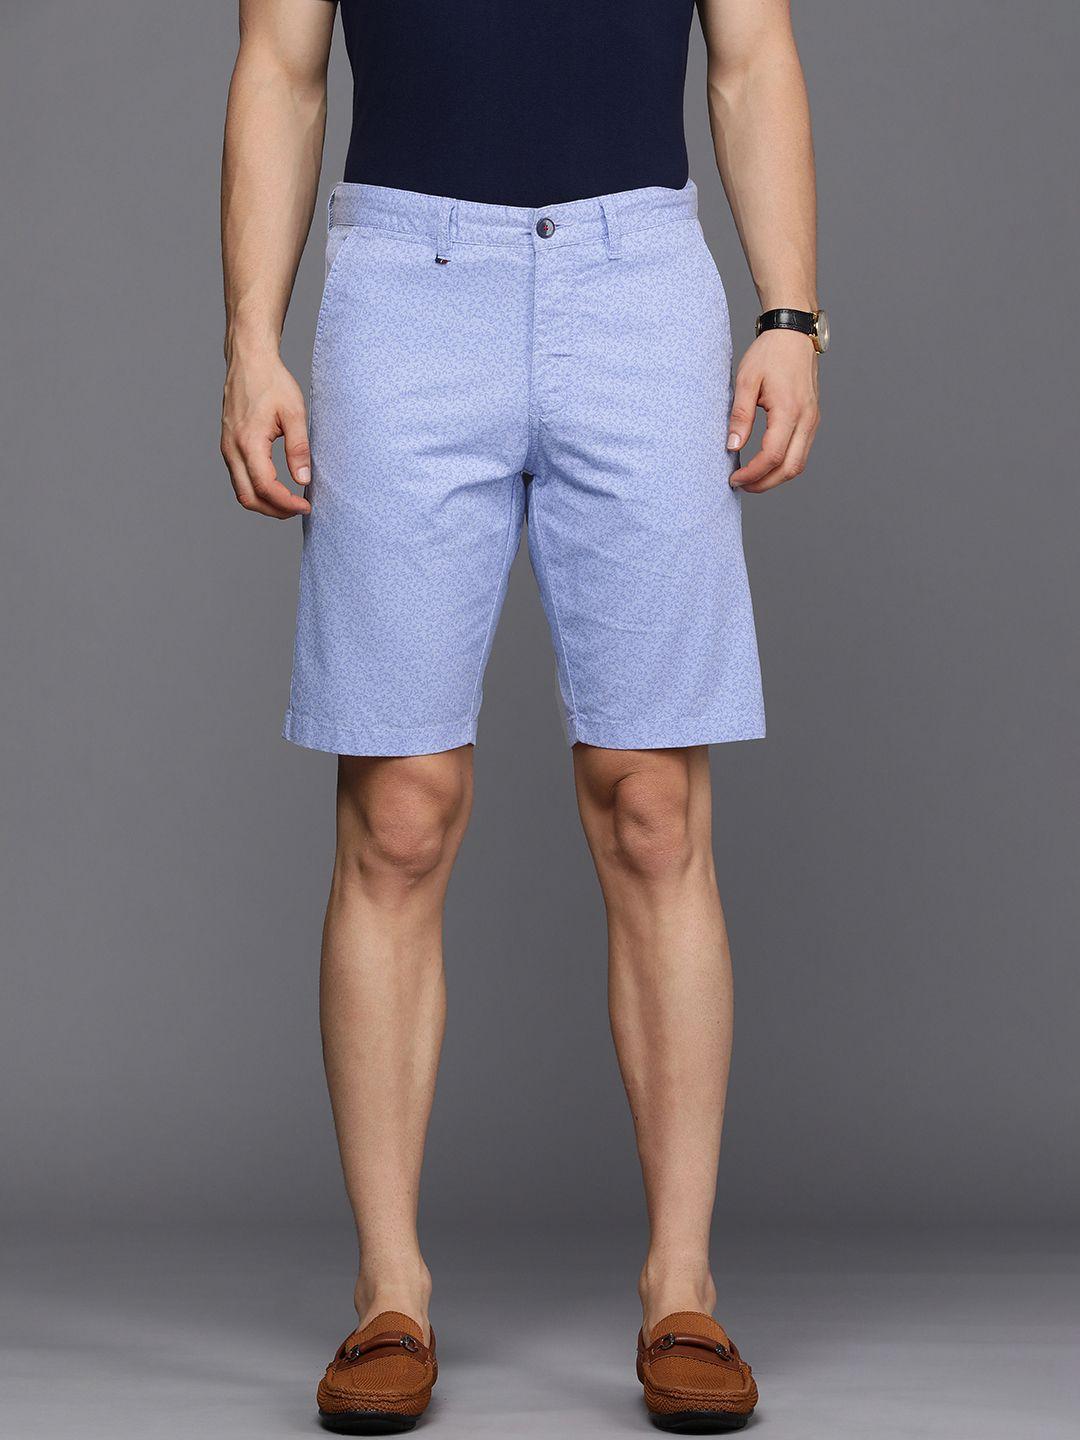 louis philippe sport men blue floral print slim fit chino shorts